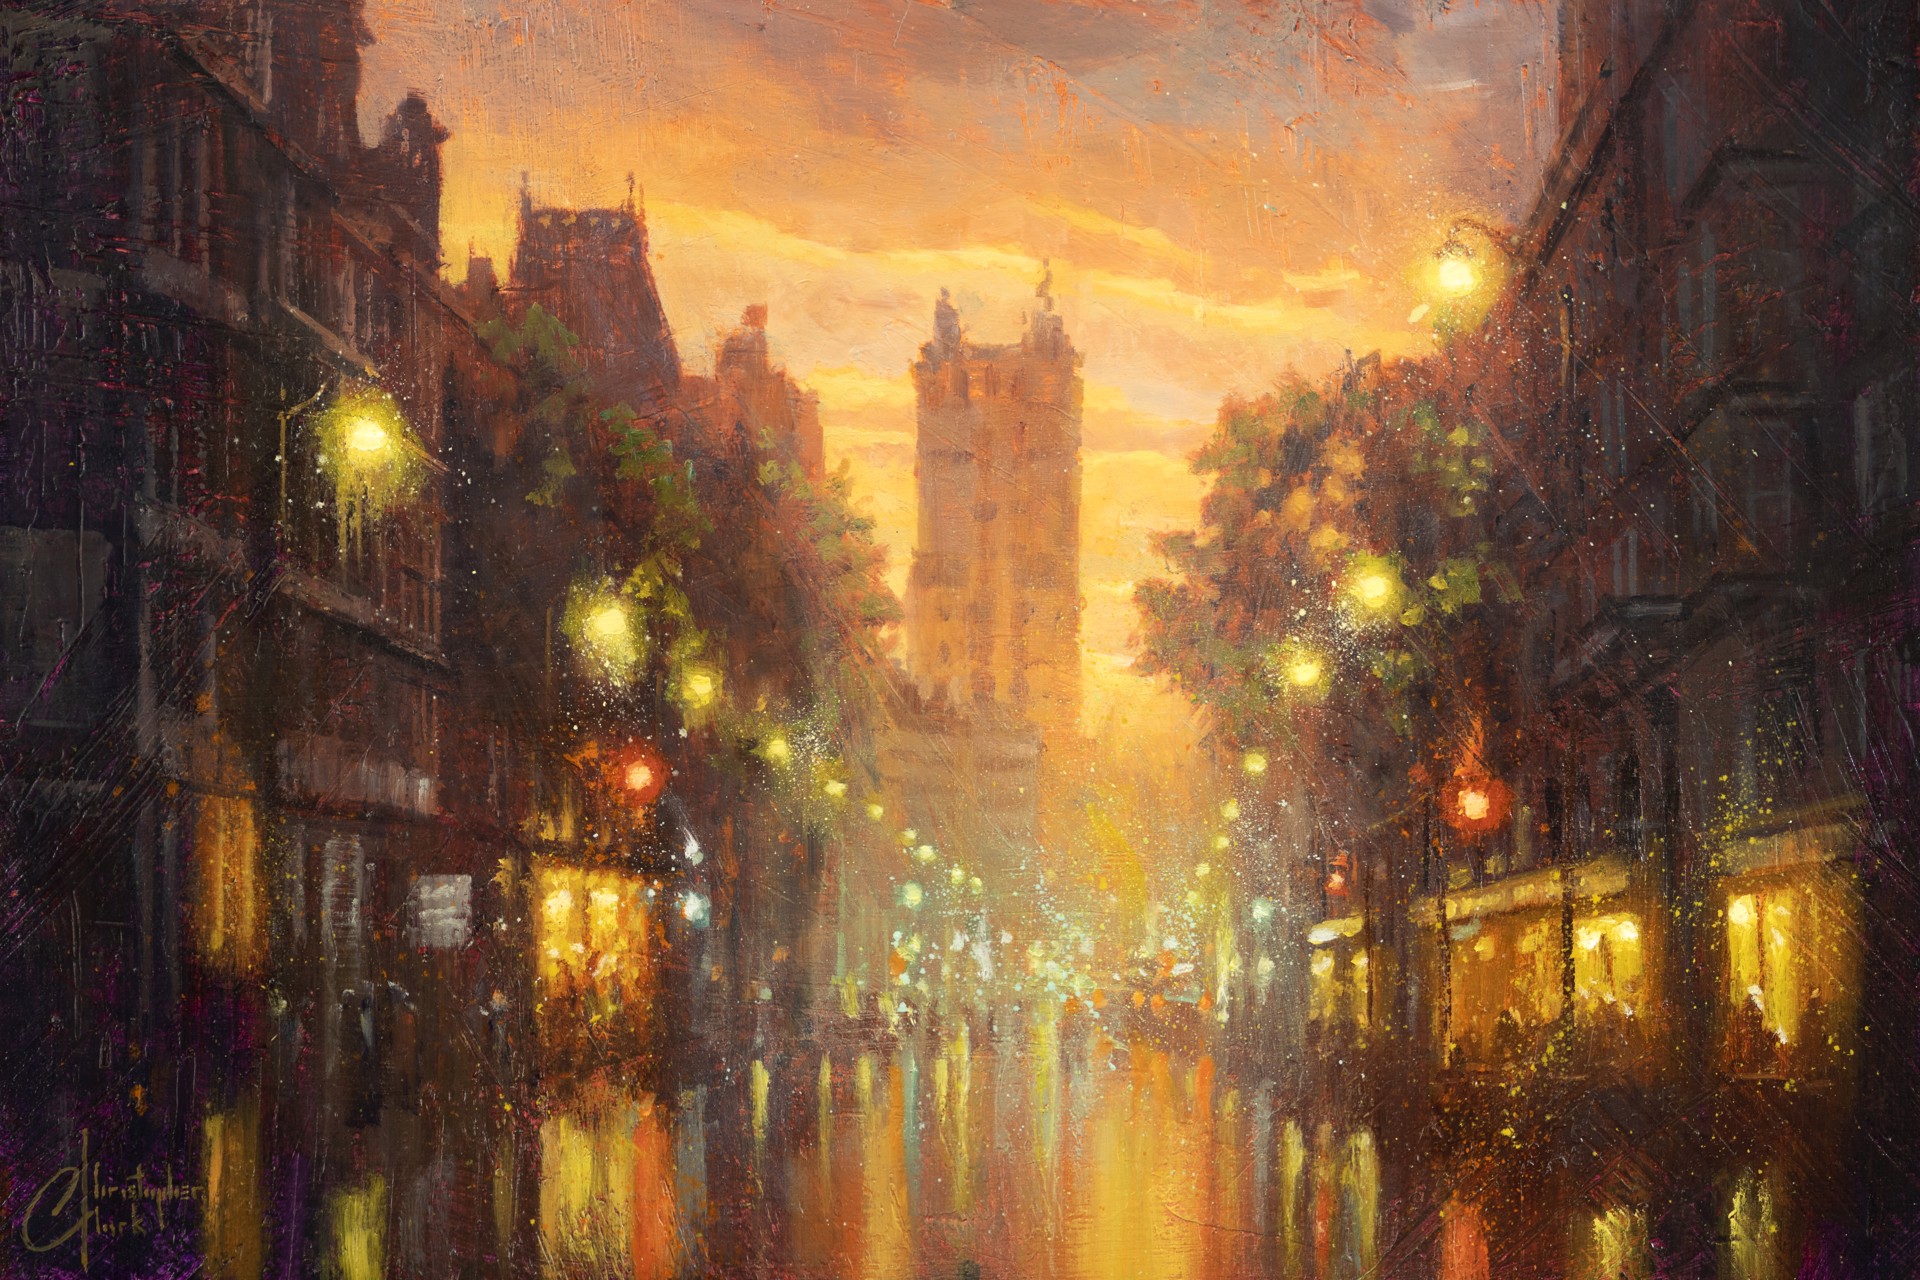 Paris, Rainy Street 3 by Christopher Clark